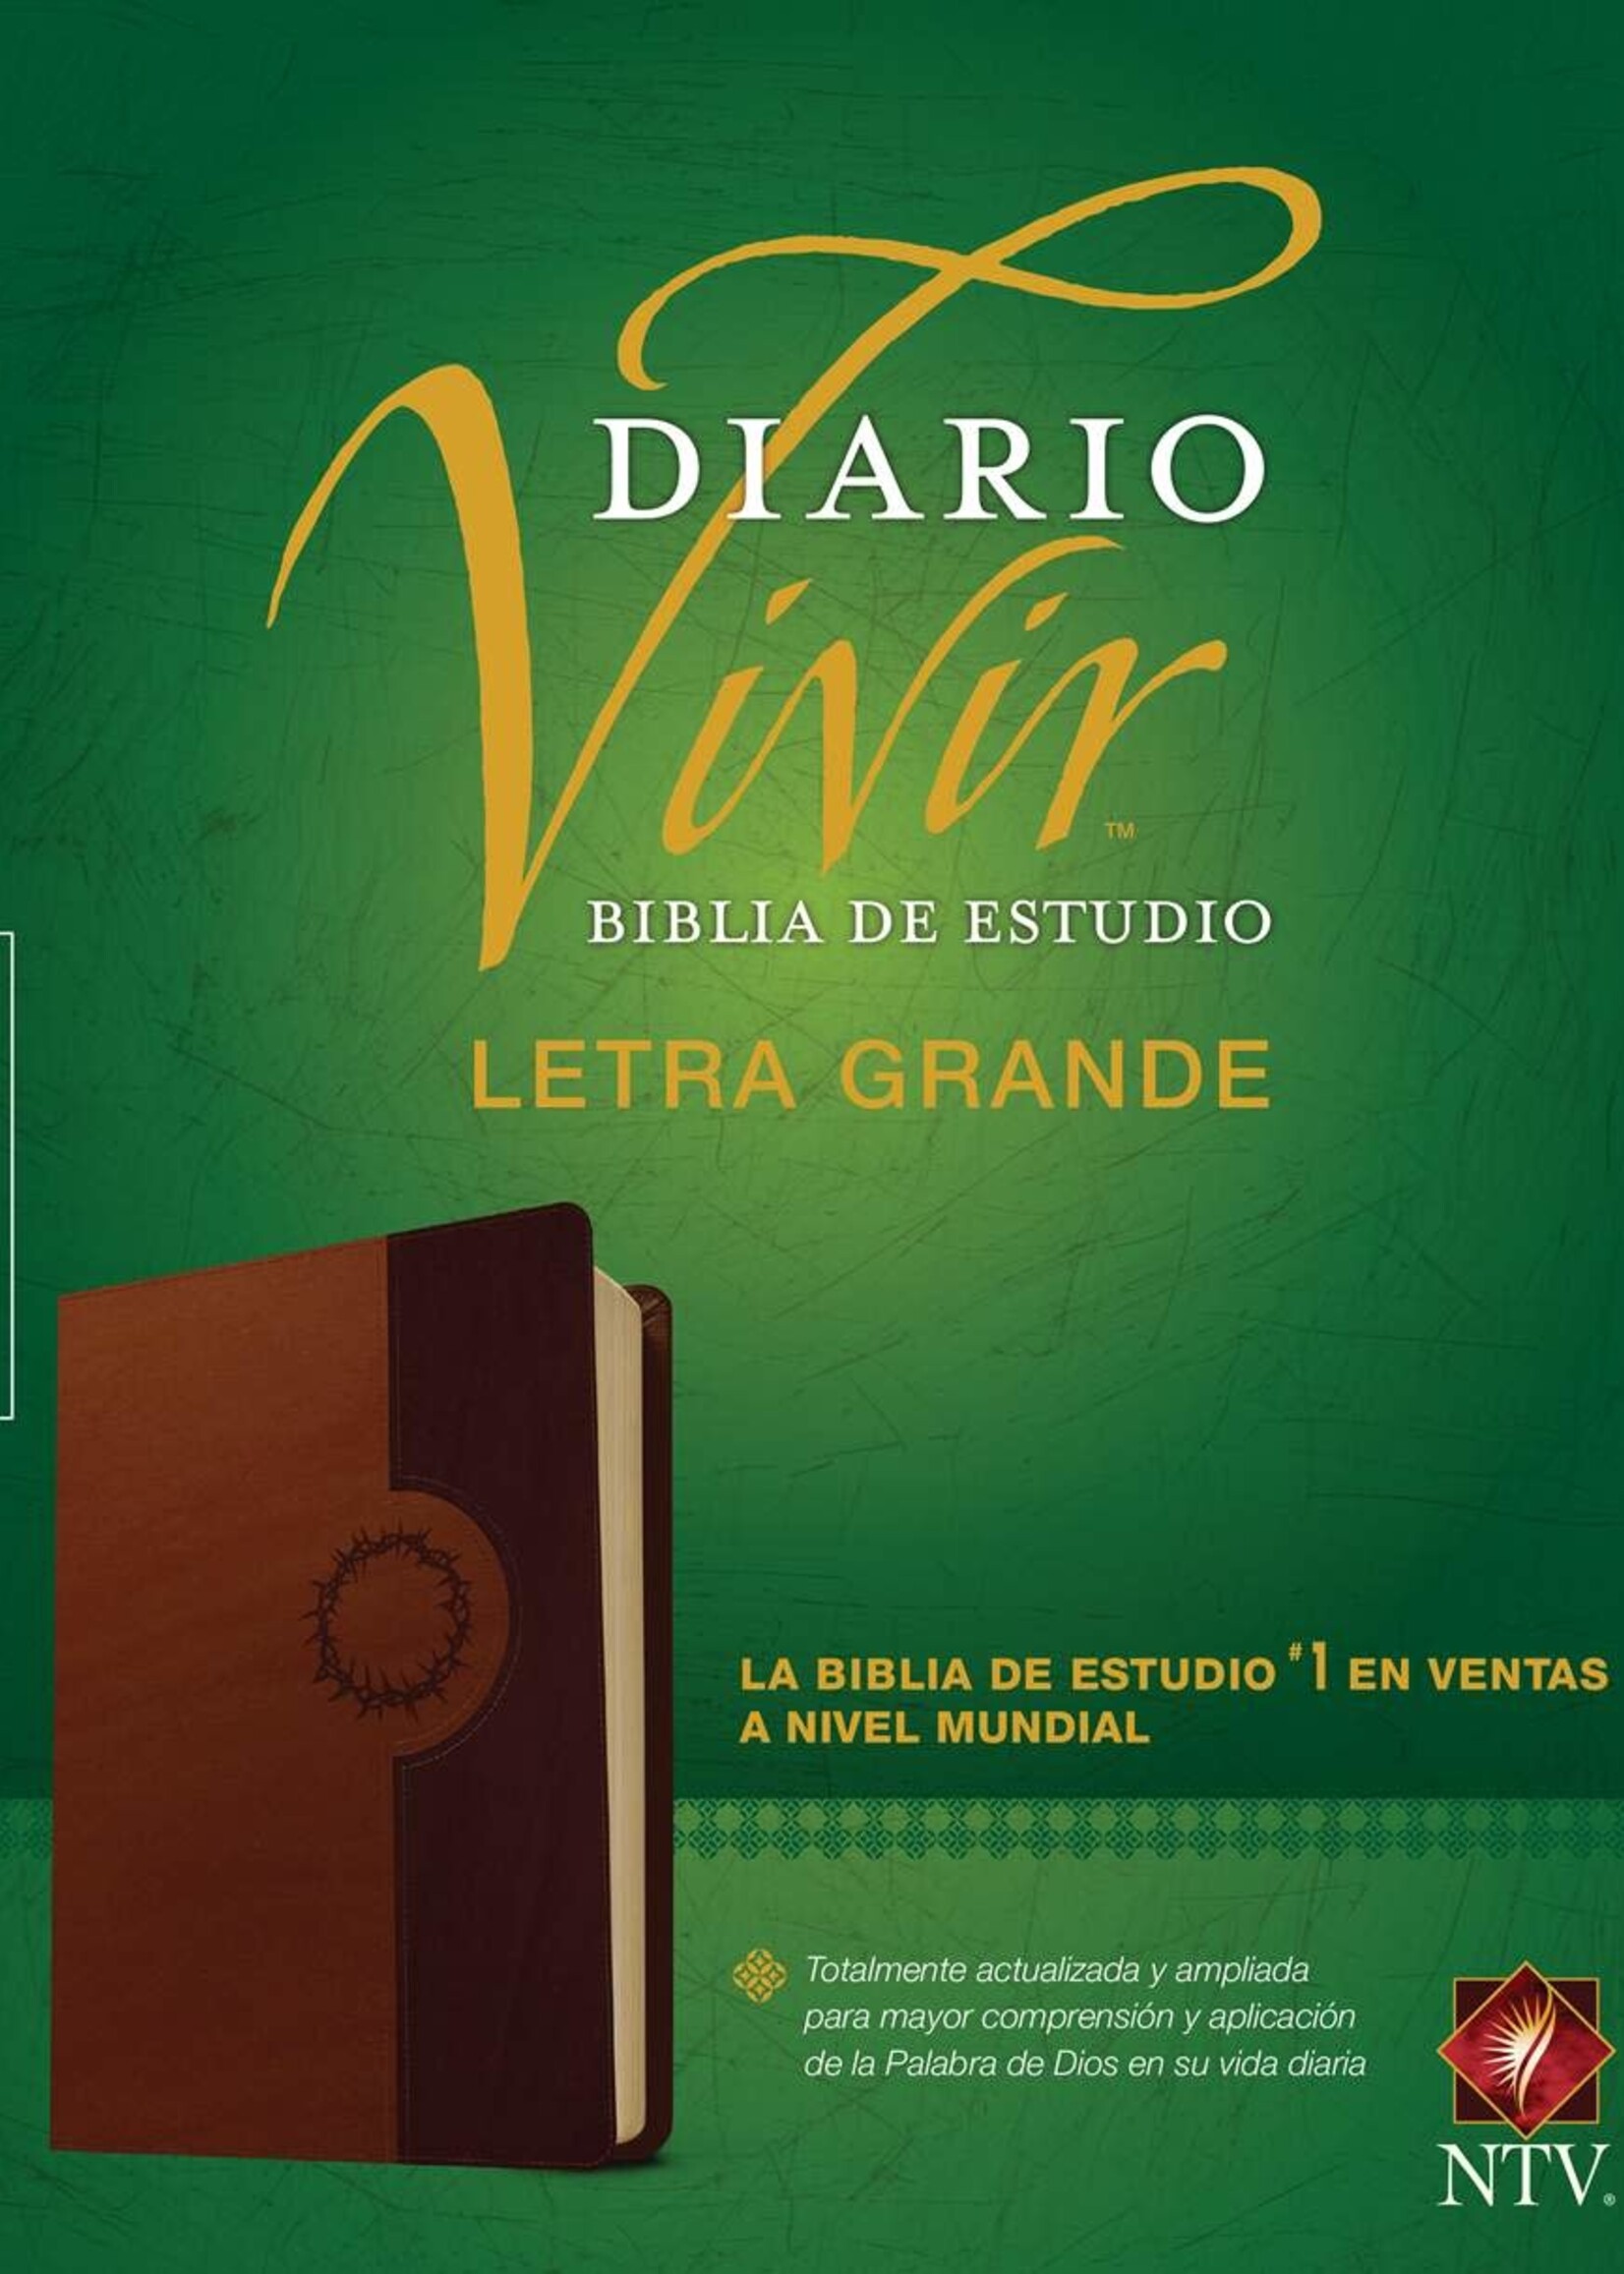 TYNDALE ESPANOL BIBLIA DE ESTUDIO NTV DIARIO VIVIR LETRA GRANDE CAFE